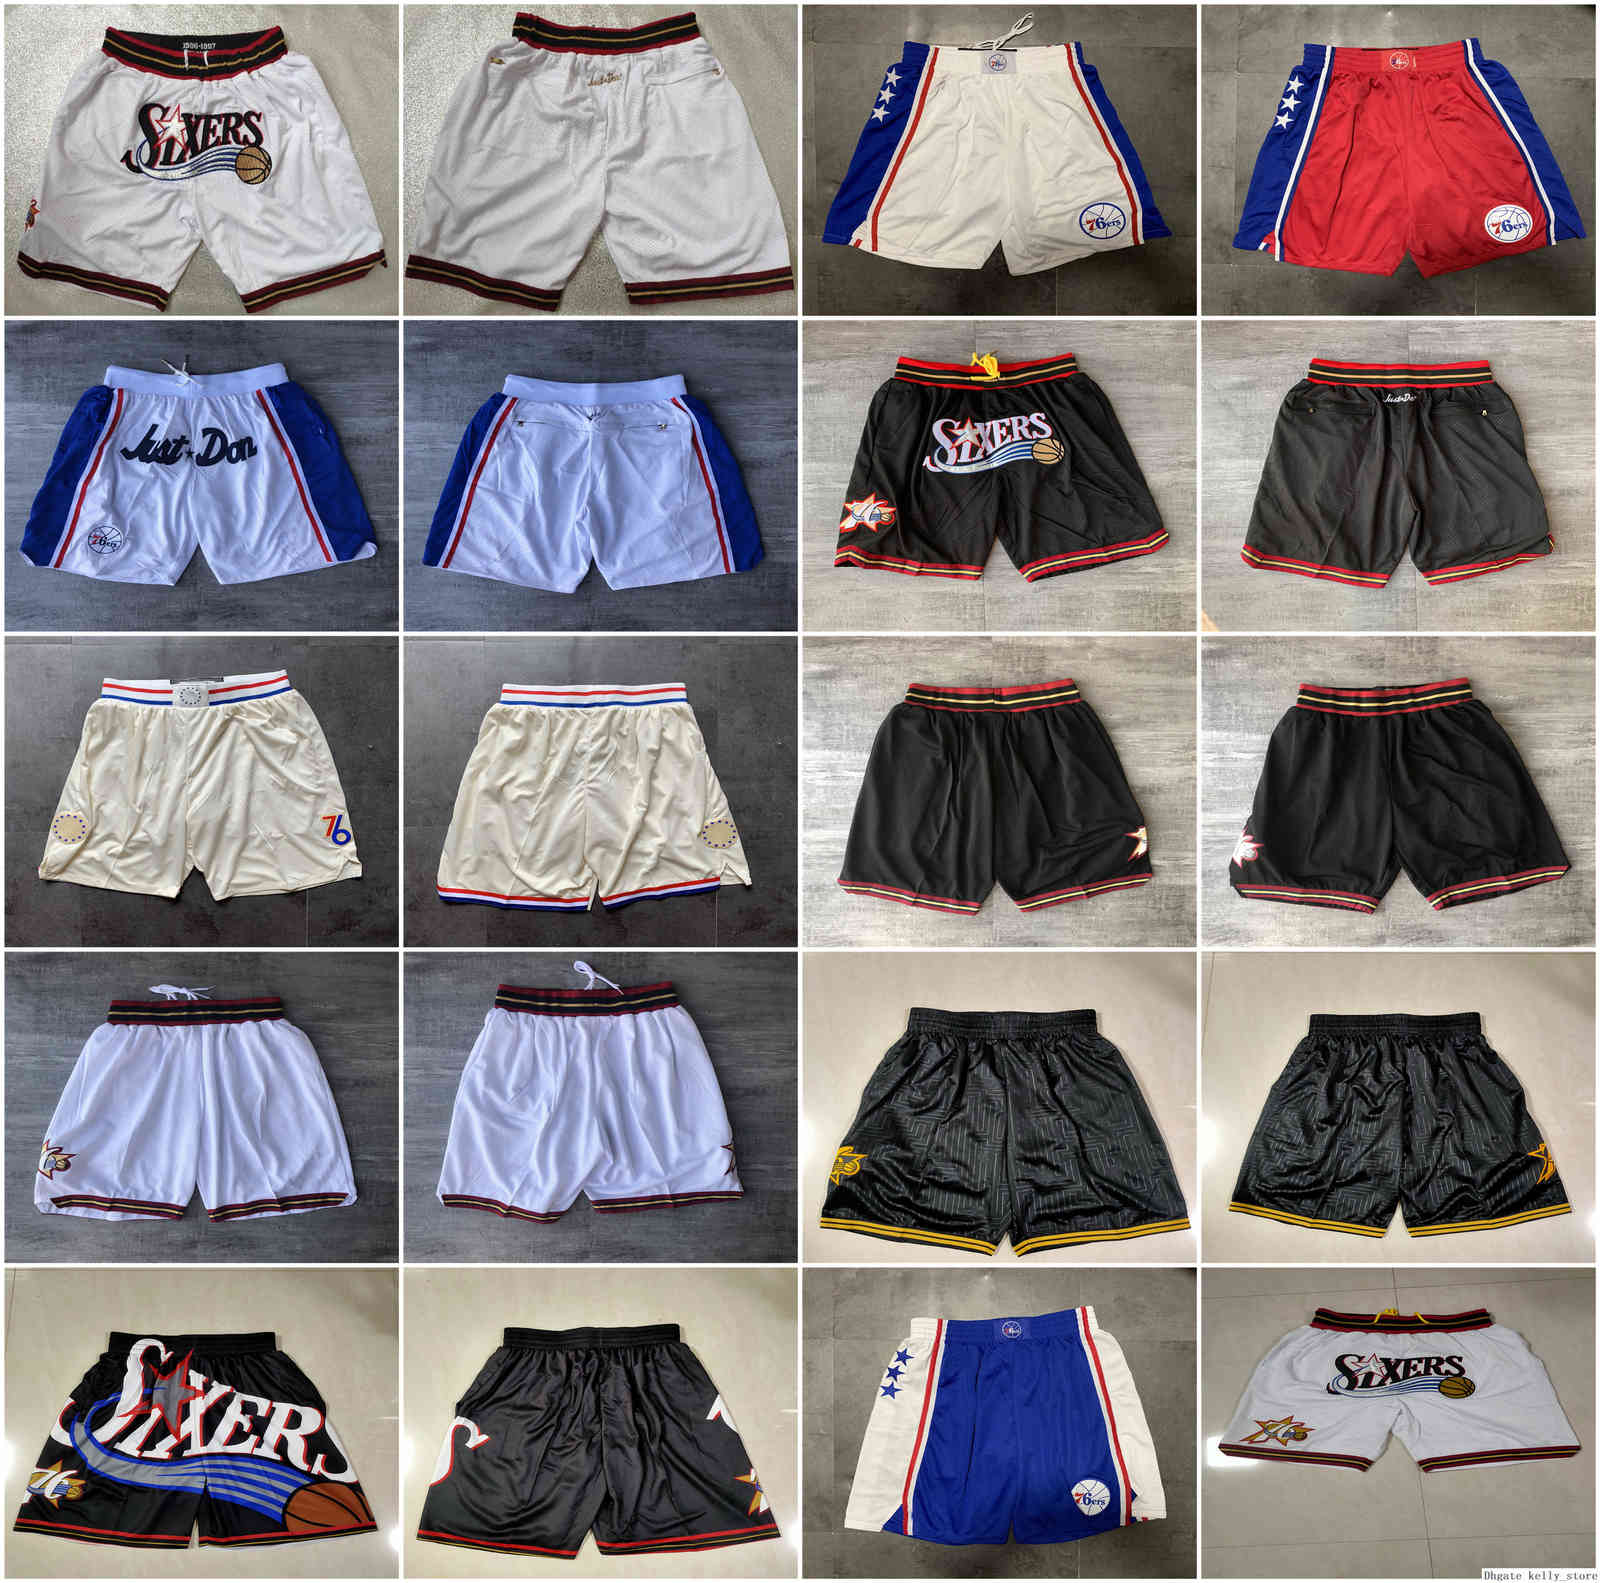 

Team Basketball''nba''Shorts Mesh Just Don Retro 1996-97 City Version Wear Sport Pant With Pocket Zipper Sweatpants Hip Pop Red Blue Black White, Just don black